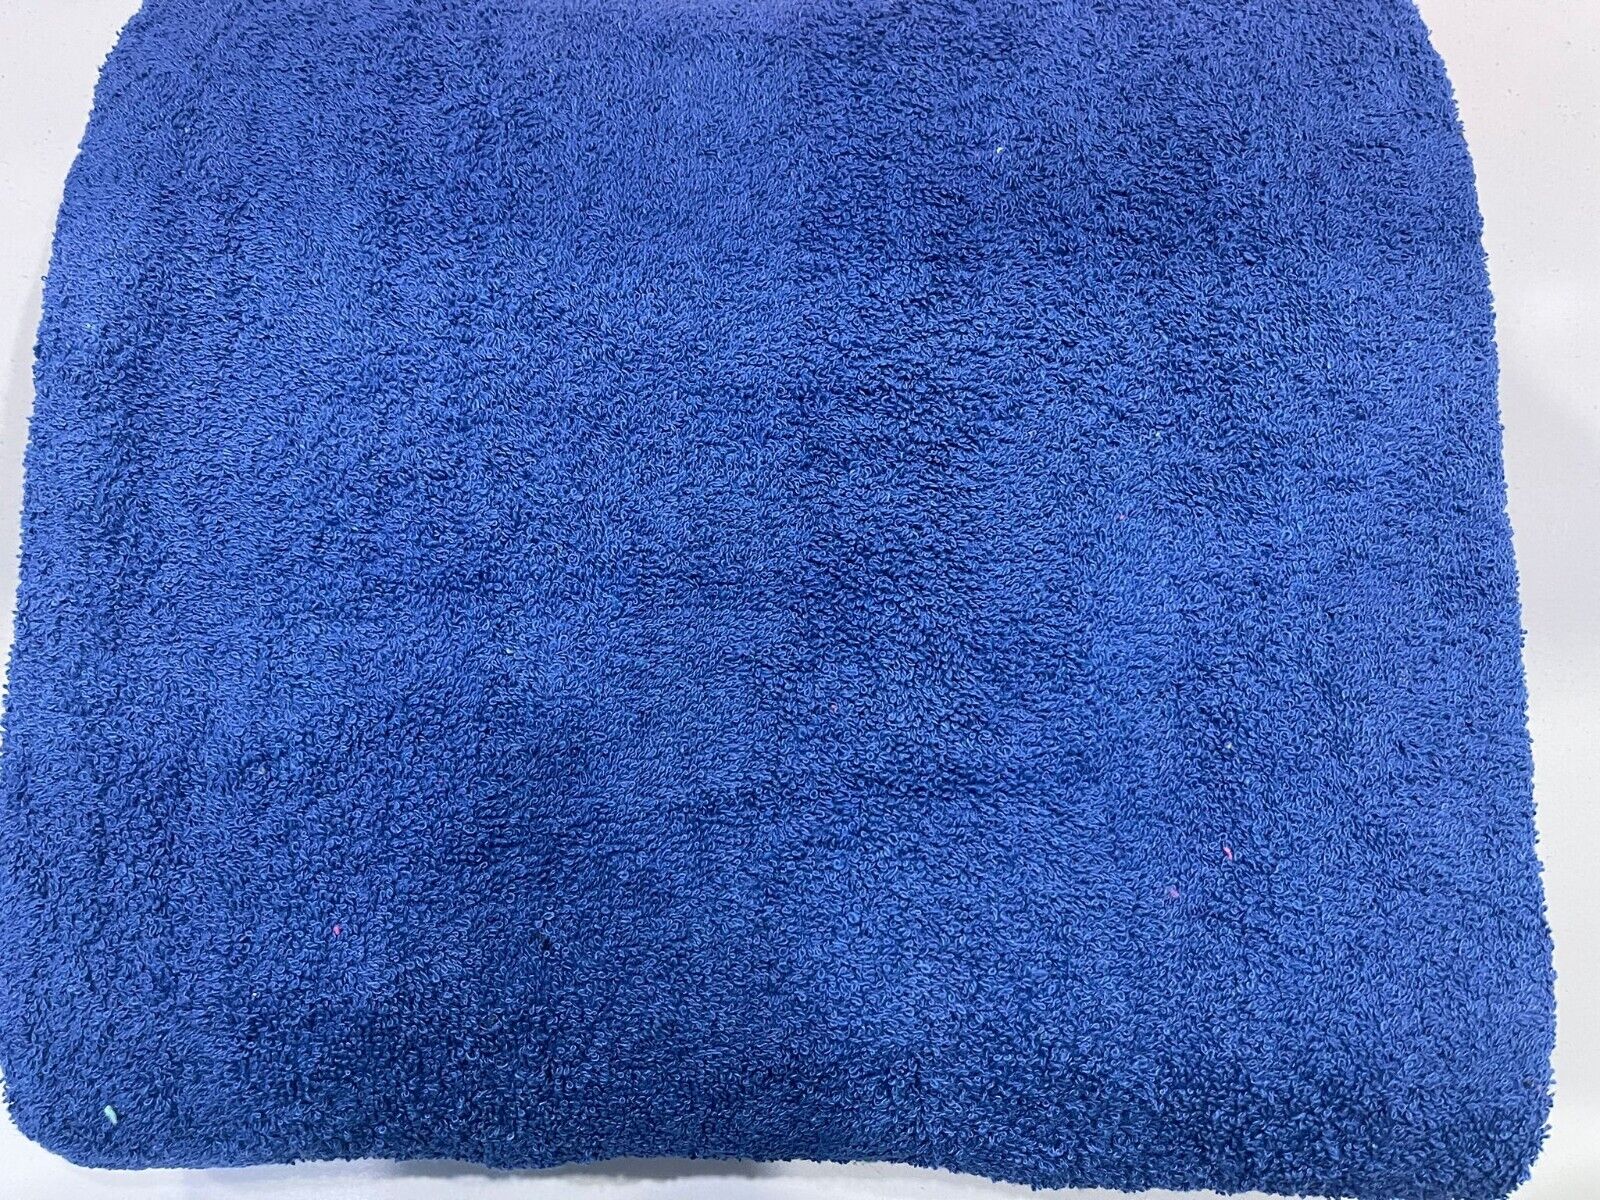 XXXL Large Jumbo Bath Sheet Towel 100% Cotton (150 x 200 CM)